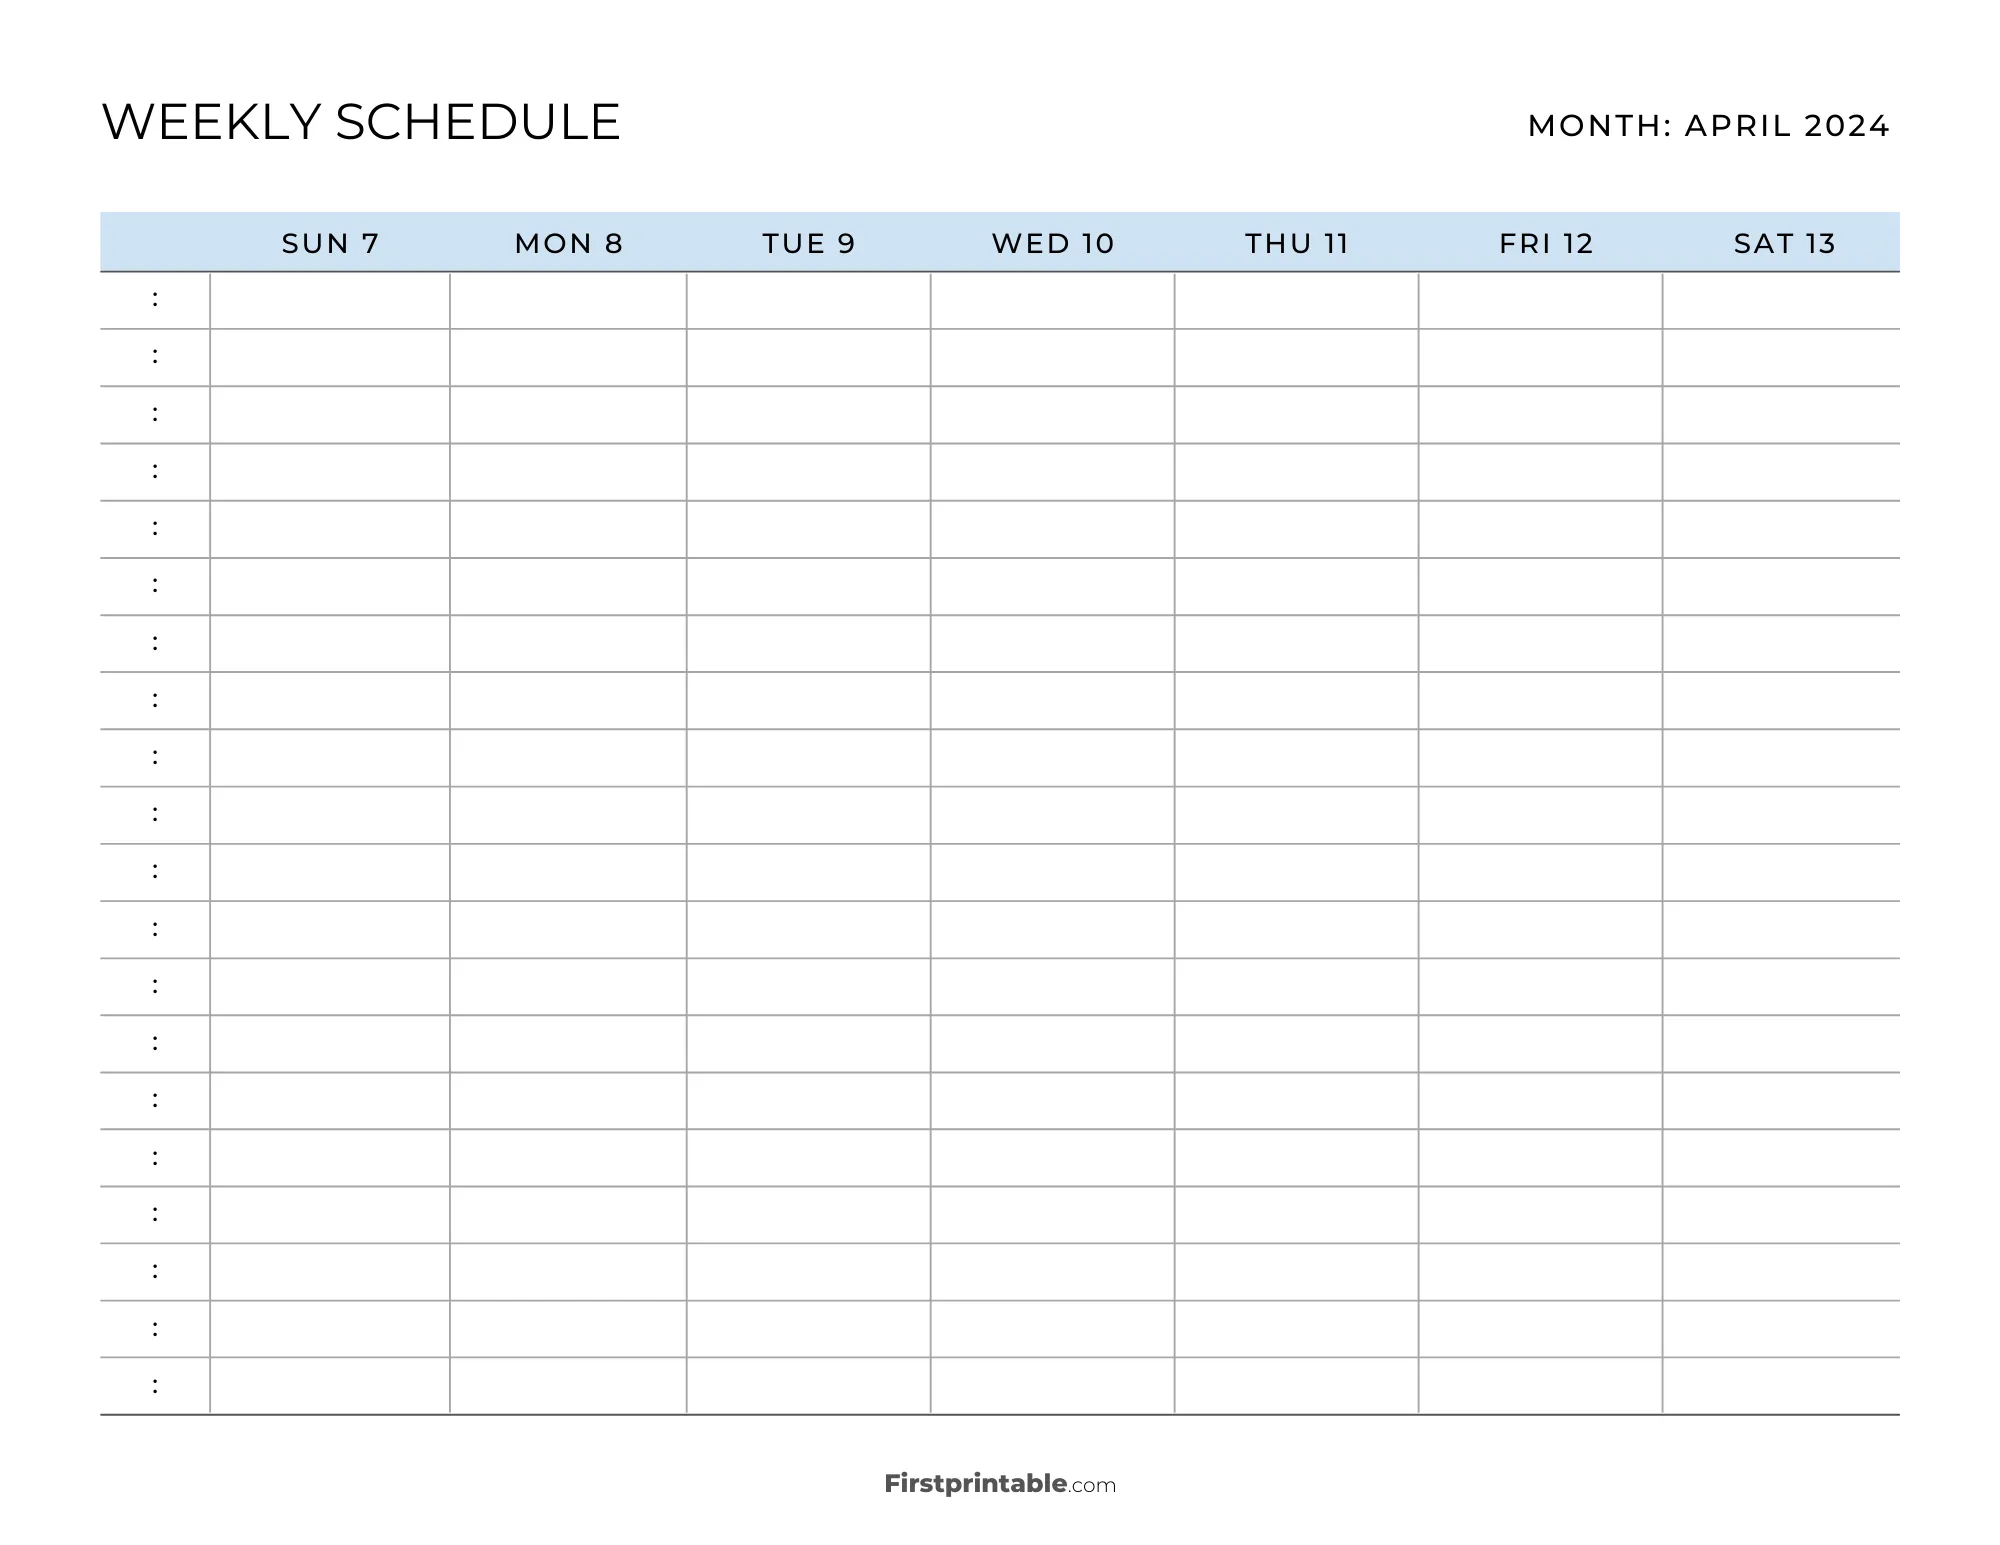 Printable Weekly Schedule Template April 2024 - Blue